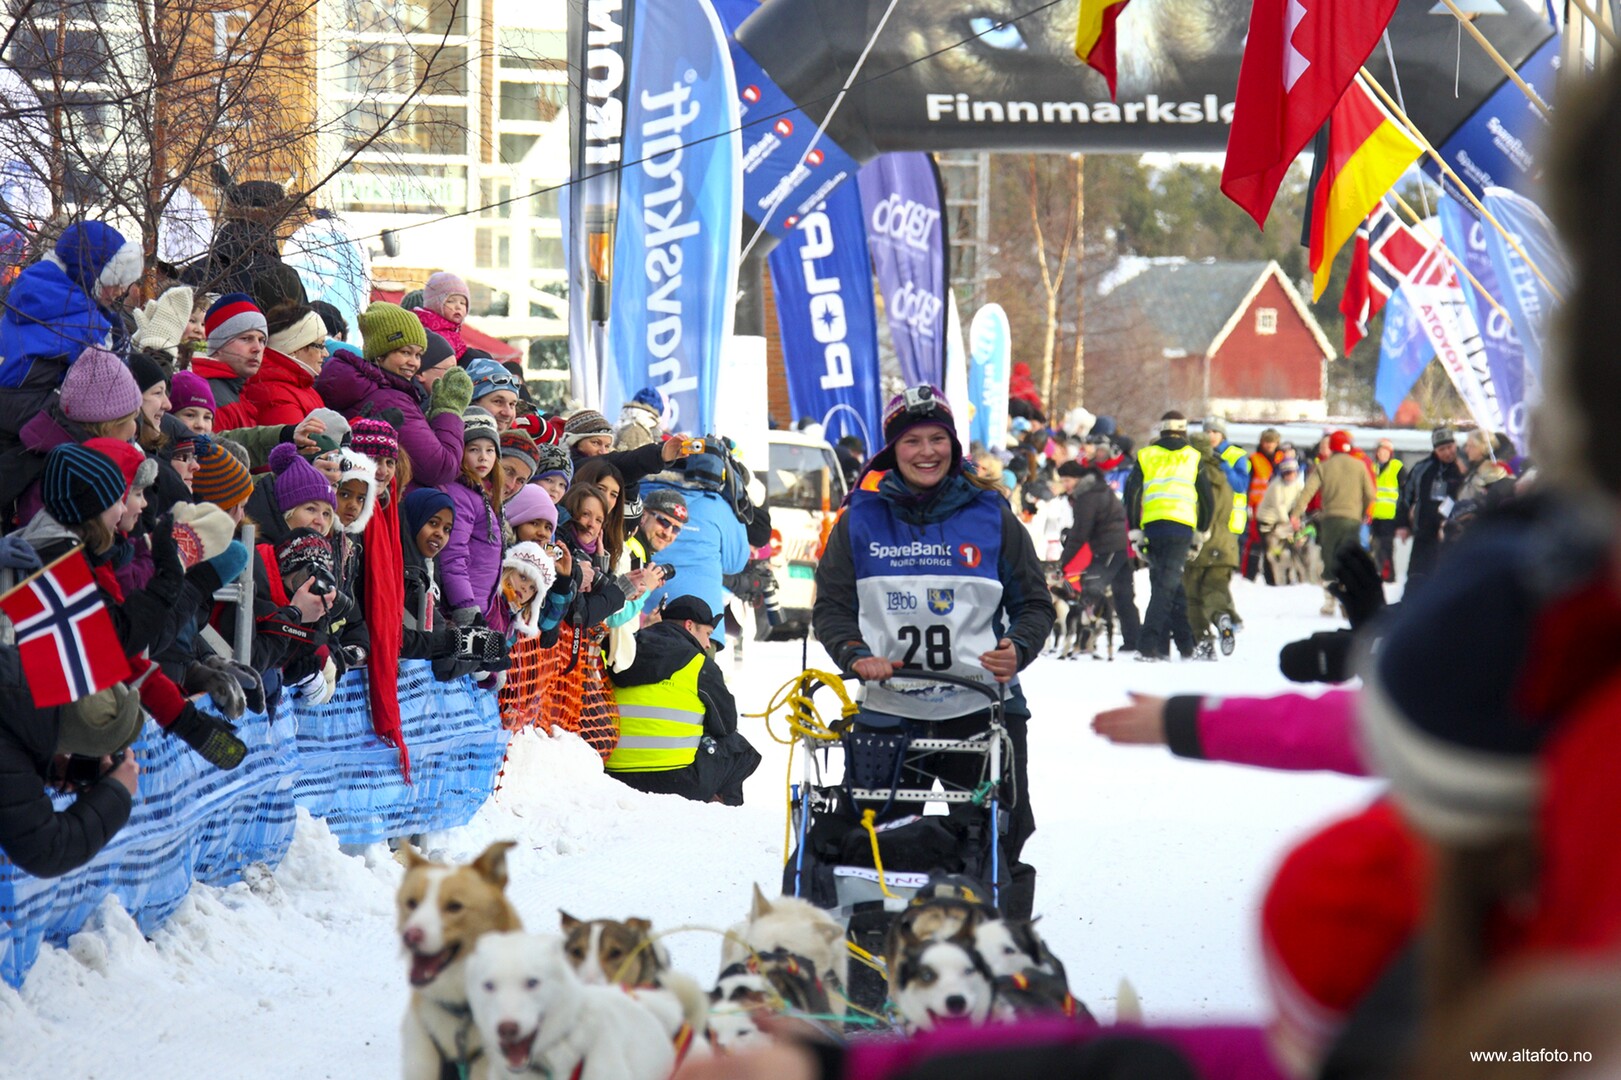 The Finnmark Dog Race has started © Vidar Hoel